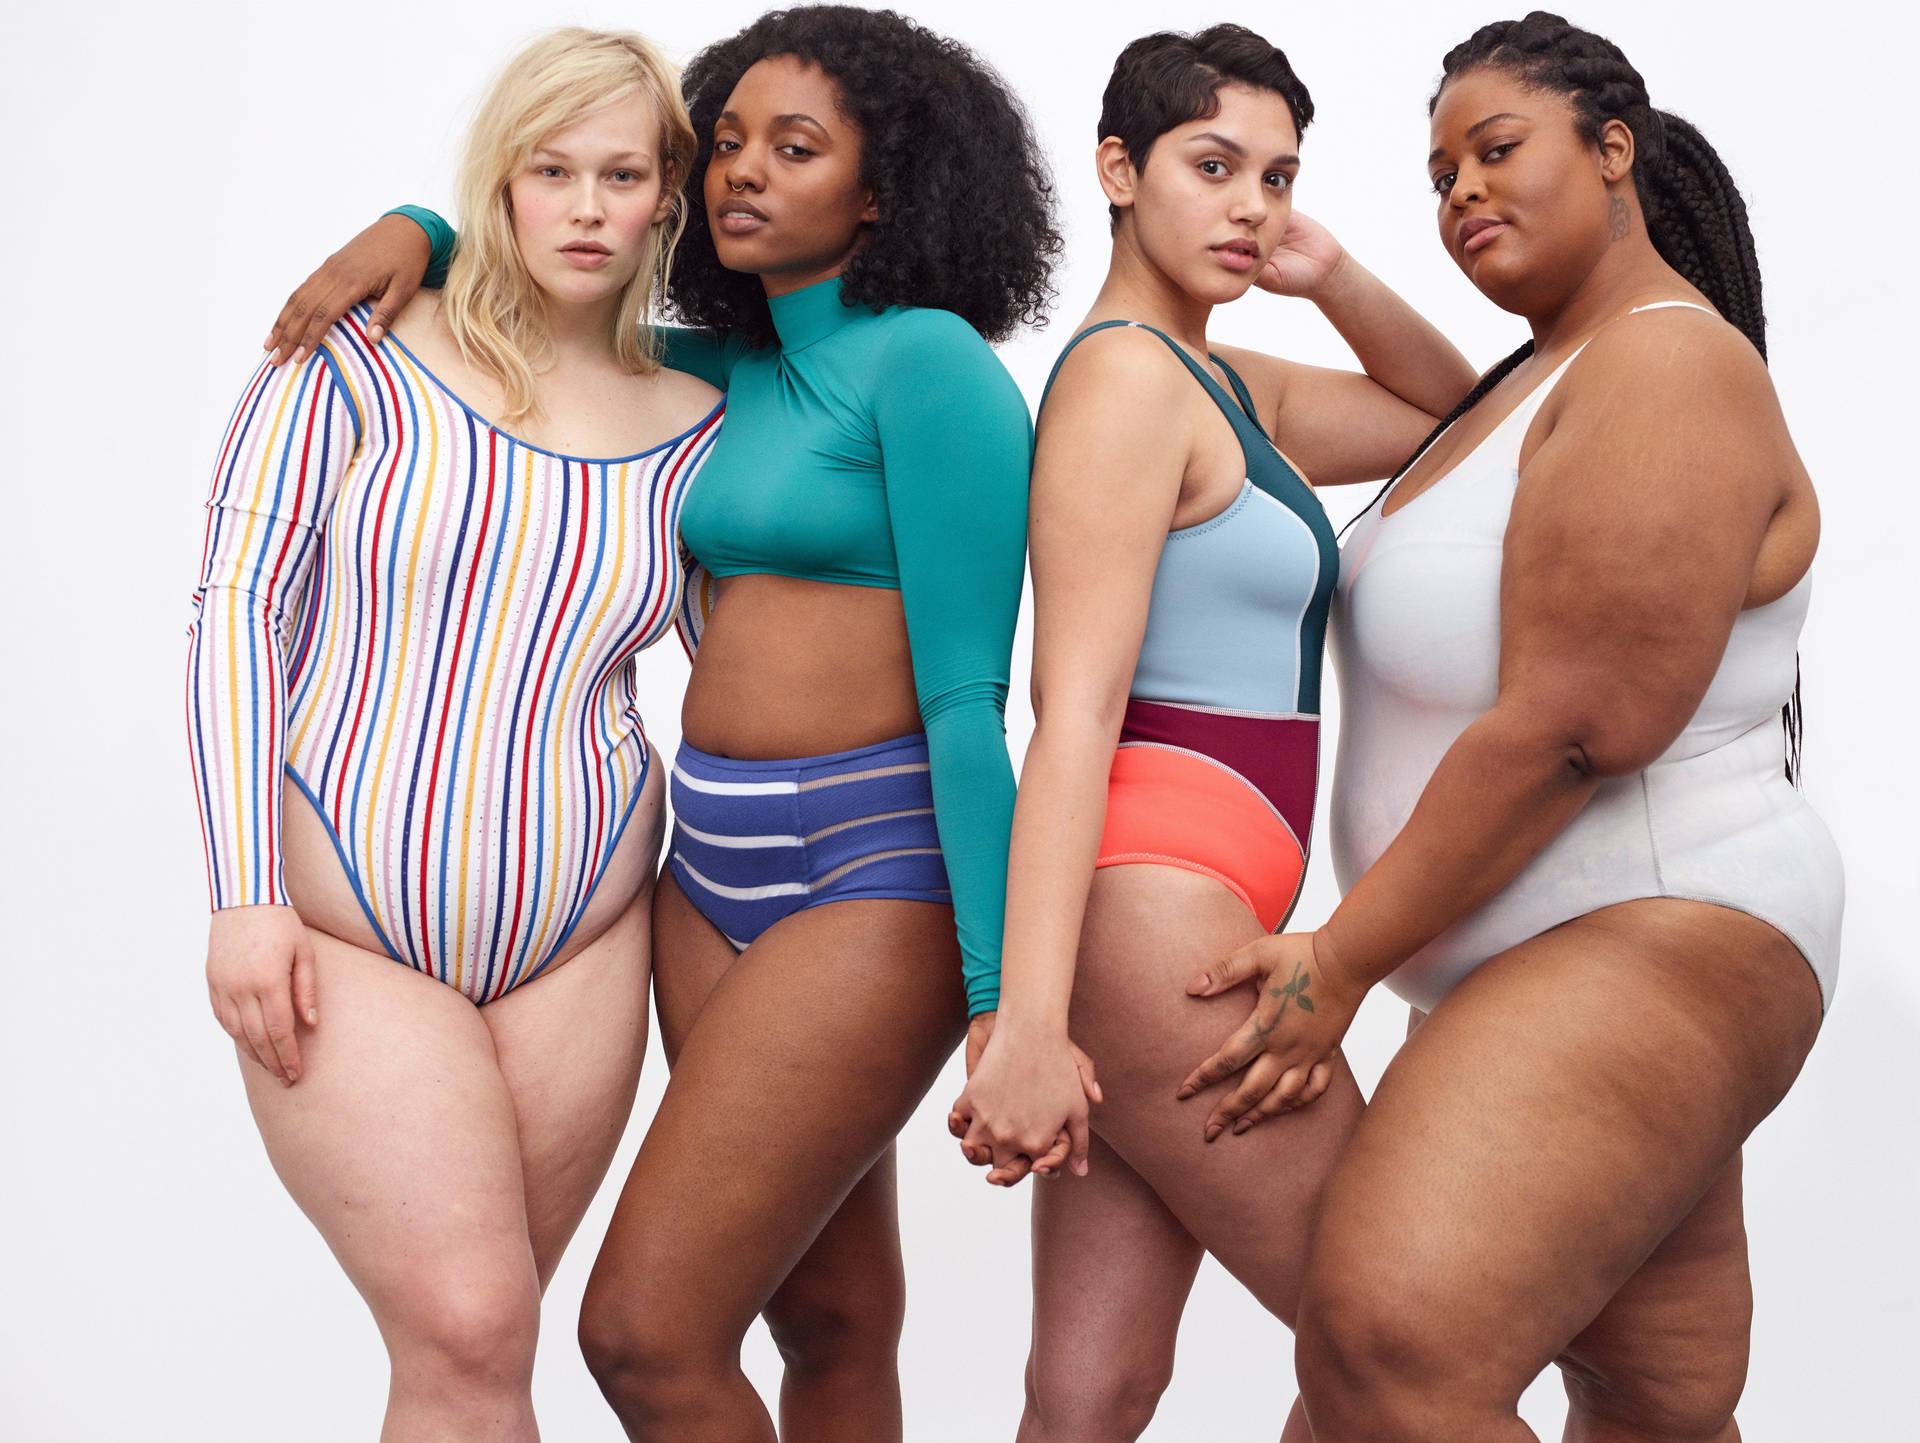 Fat Woman Group Wallpaper